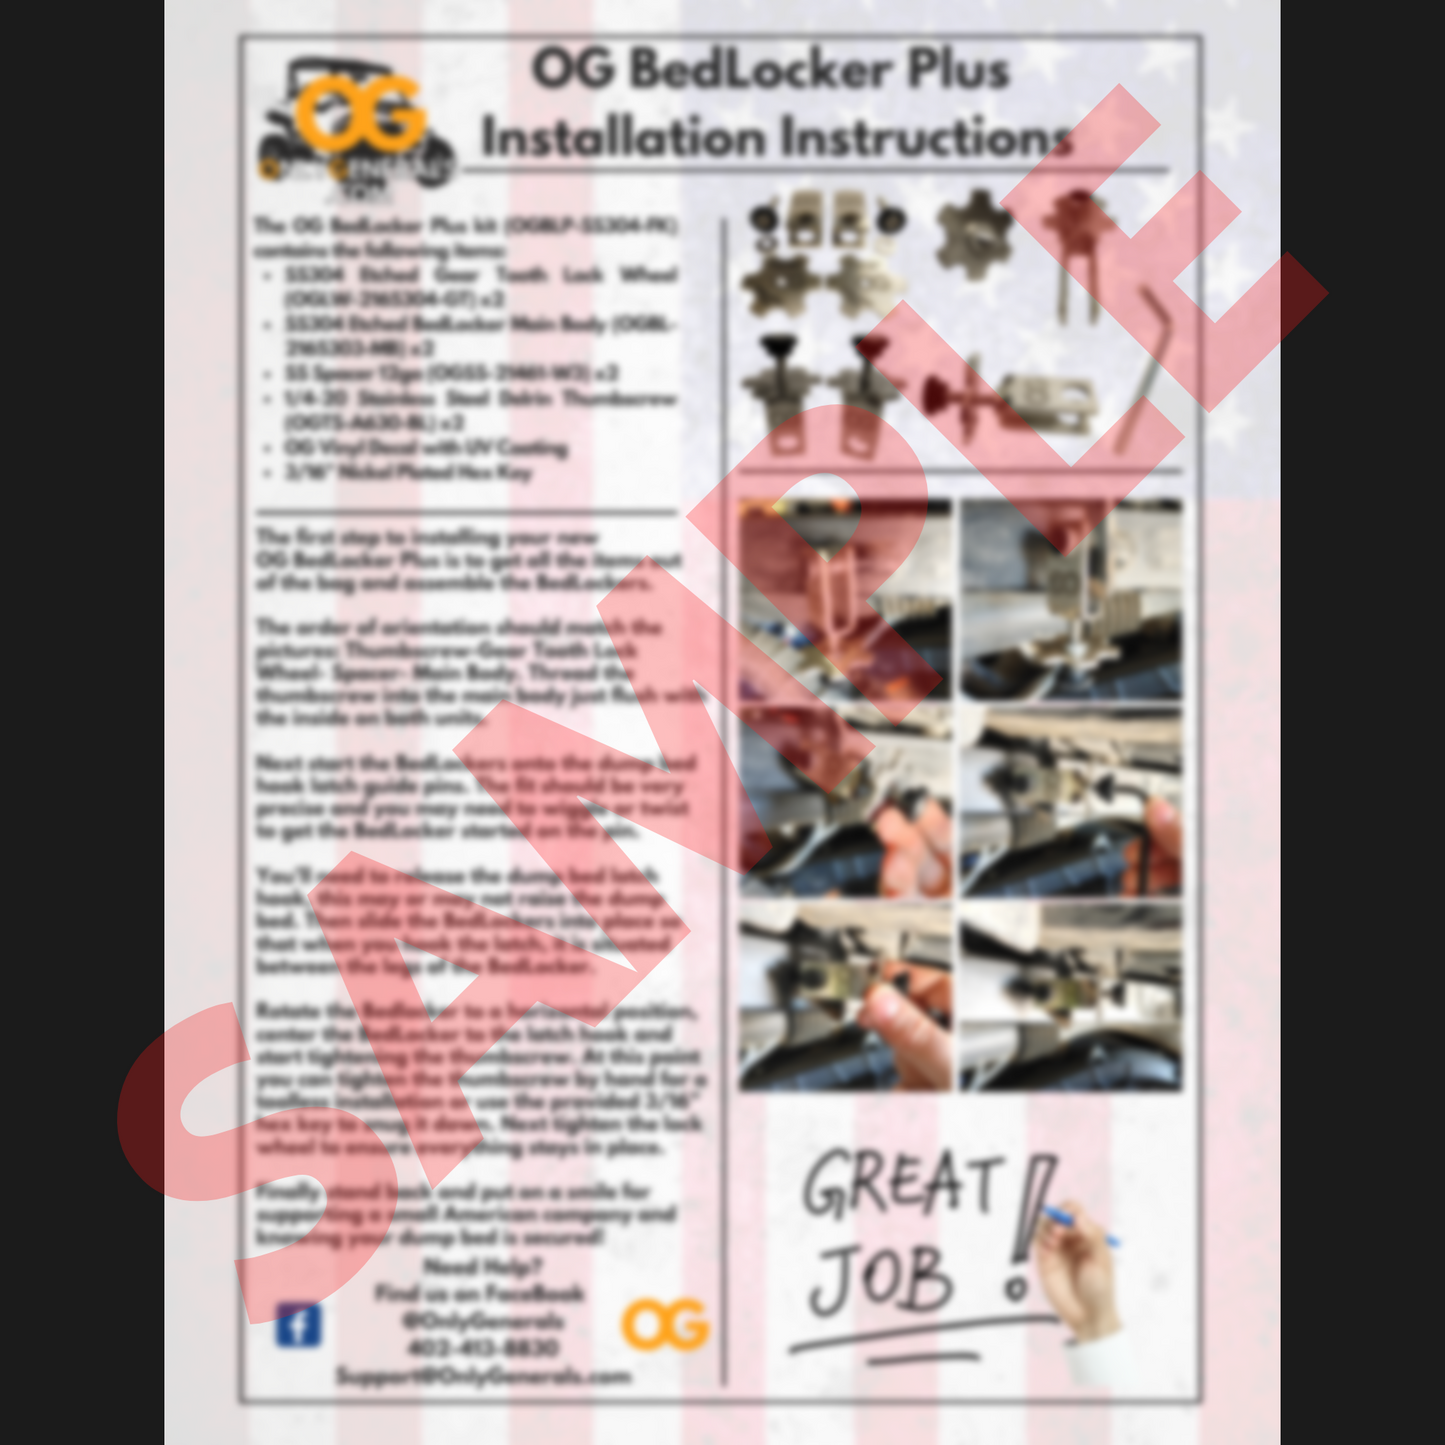 A slightly blurred sample image of OG's one page color photo instruction sheet